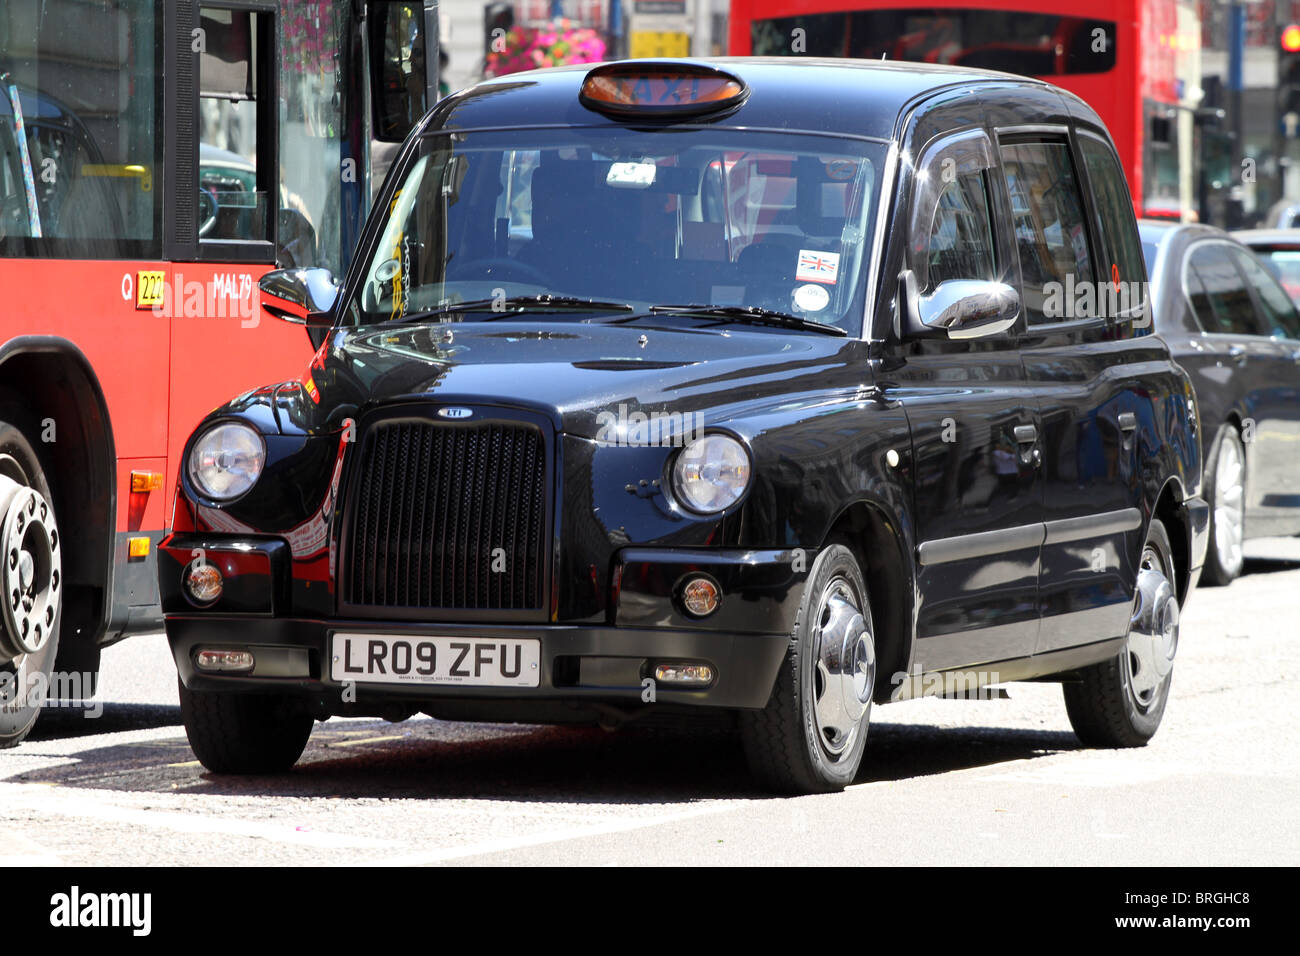 Taxi London EnglandHow Car Specs